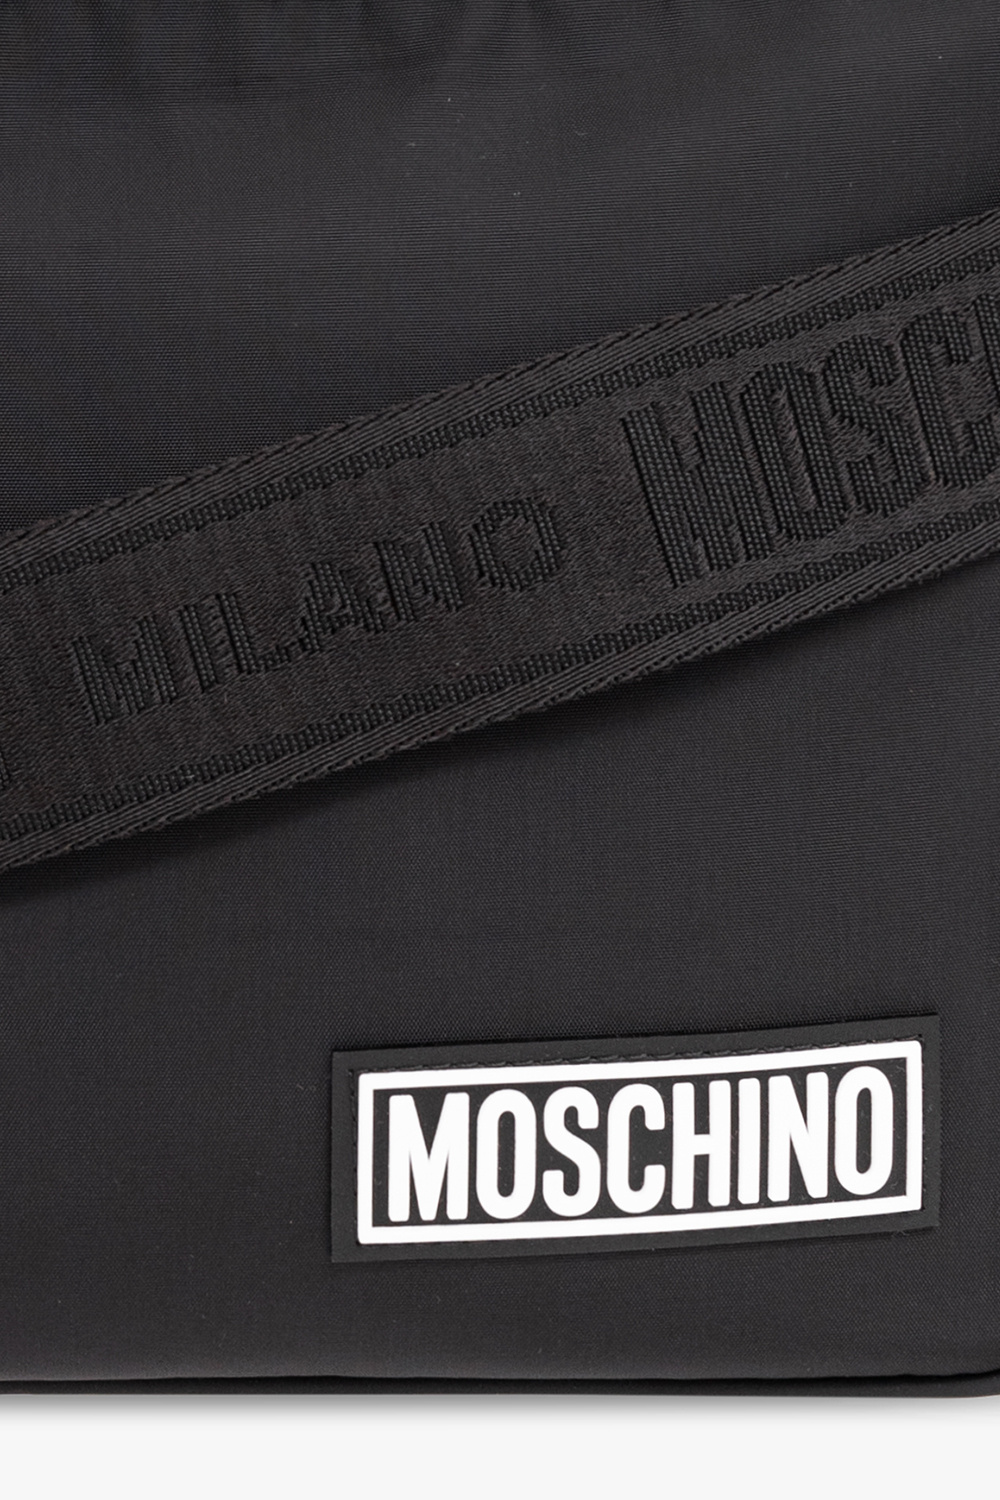 Moschino marni black pannier bucket bag